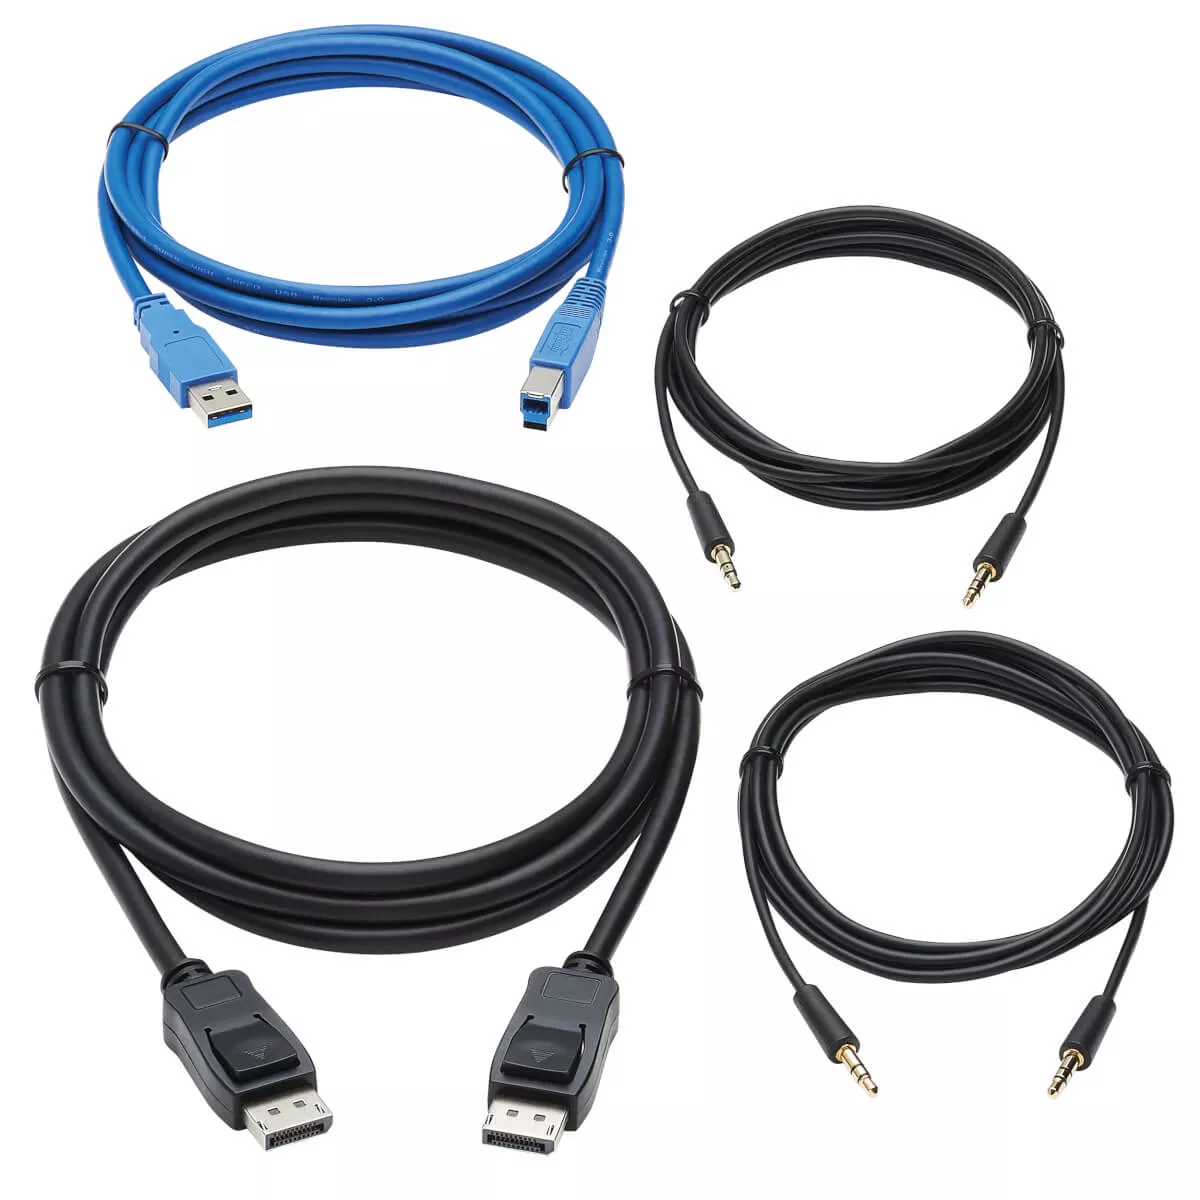 Revendeur officiel EATON TRIPPLITE DisplayPort KVM Cable Kit for Tripp Lite